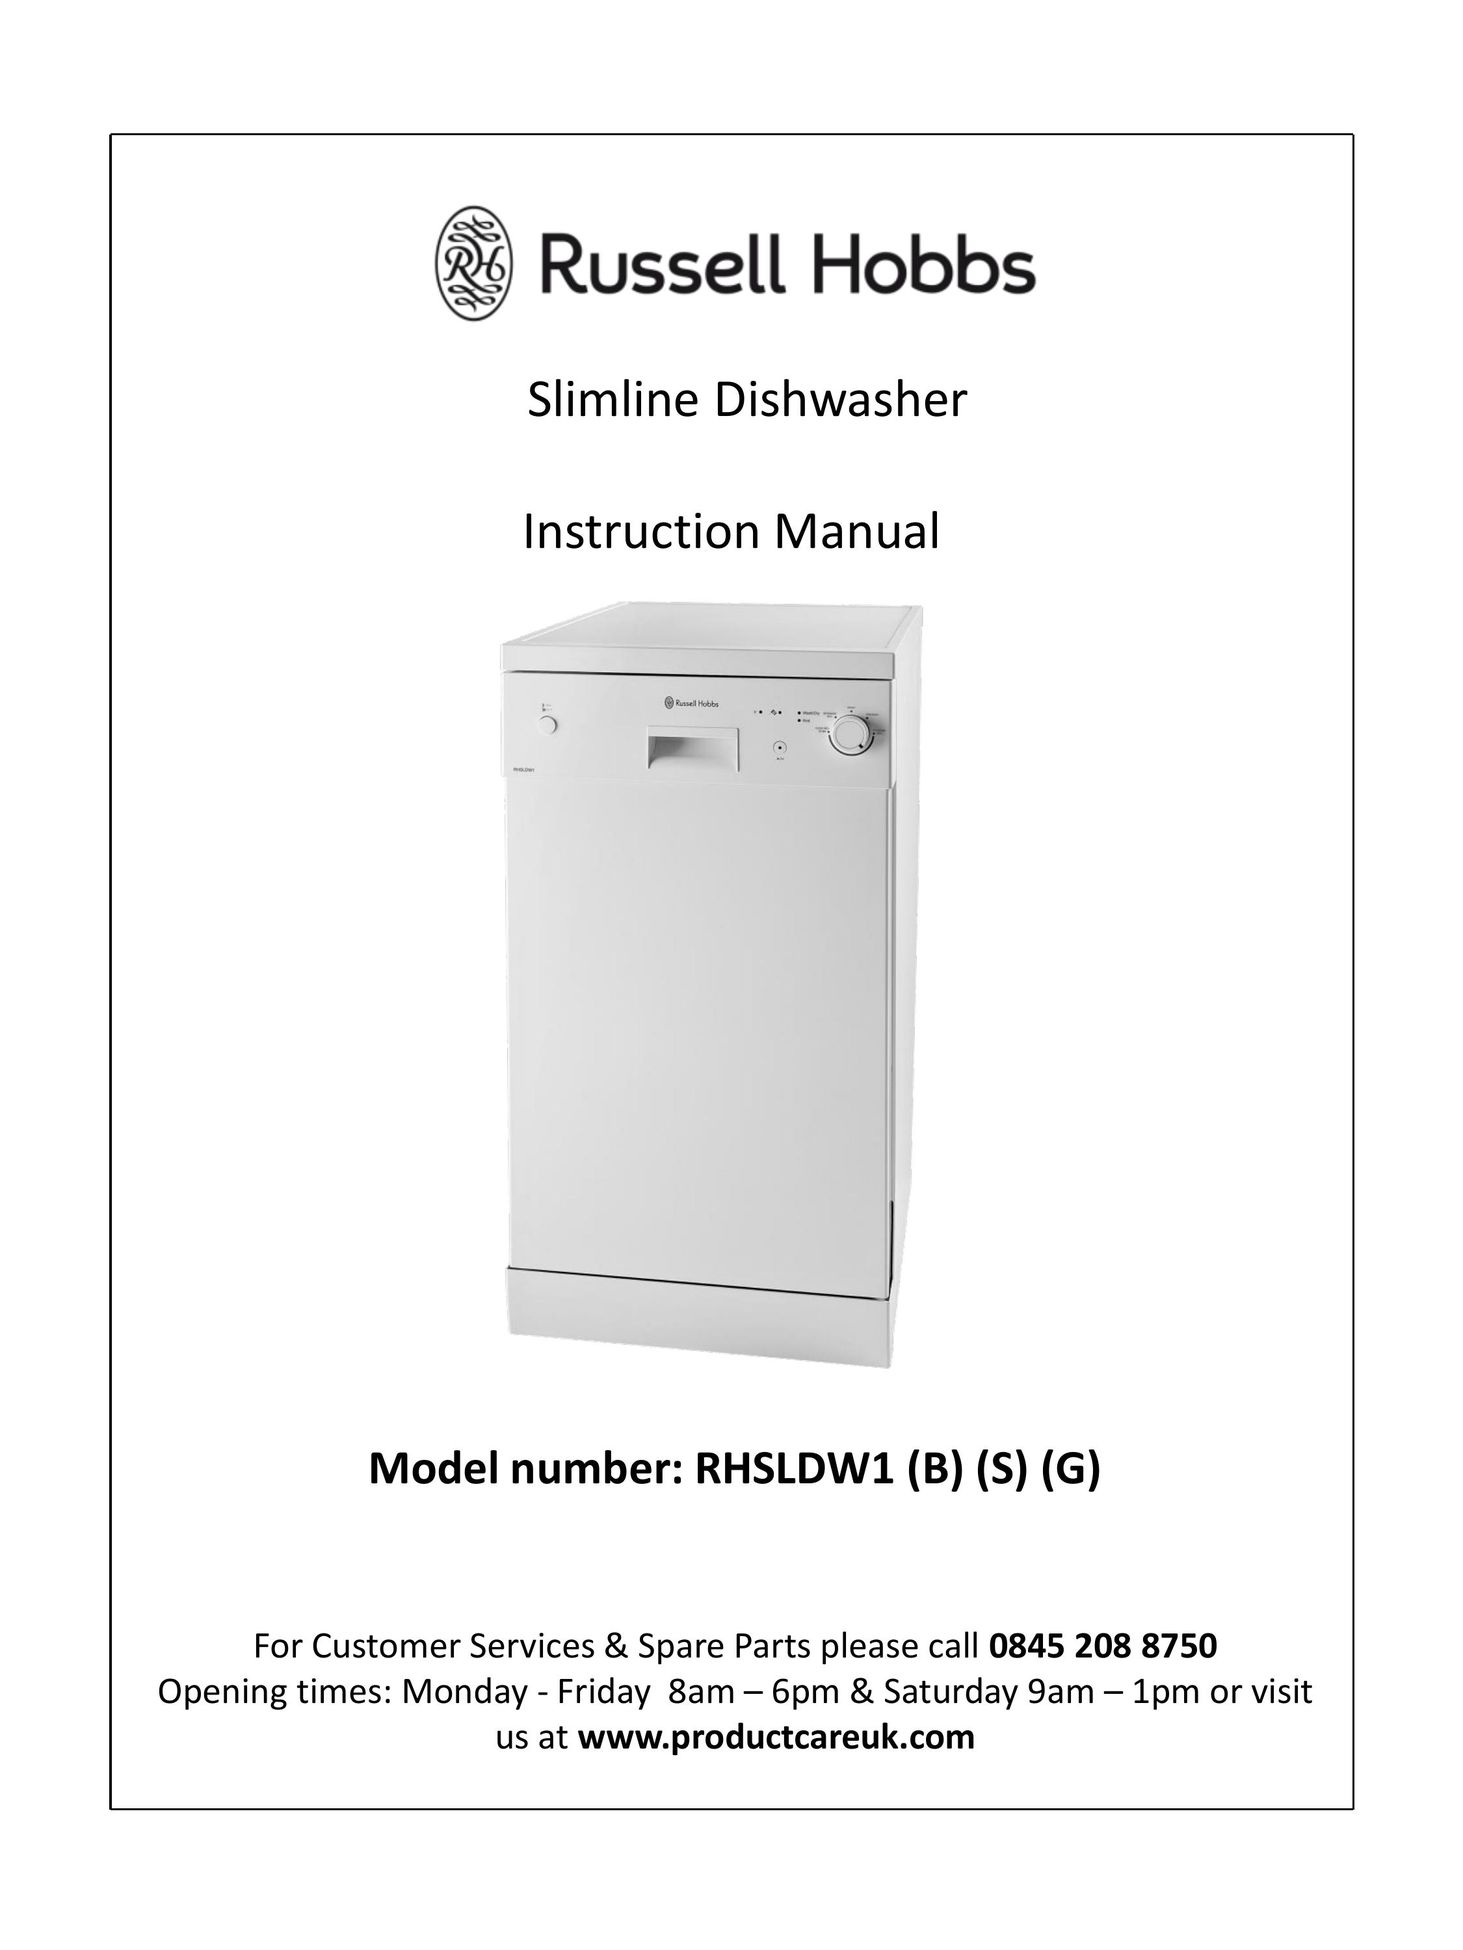 Russell Hobbs RHSLDW1B Appliance Trim Kit User Manual